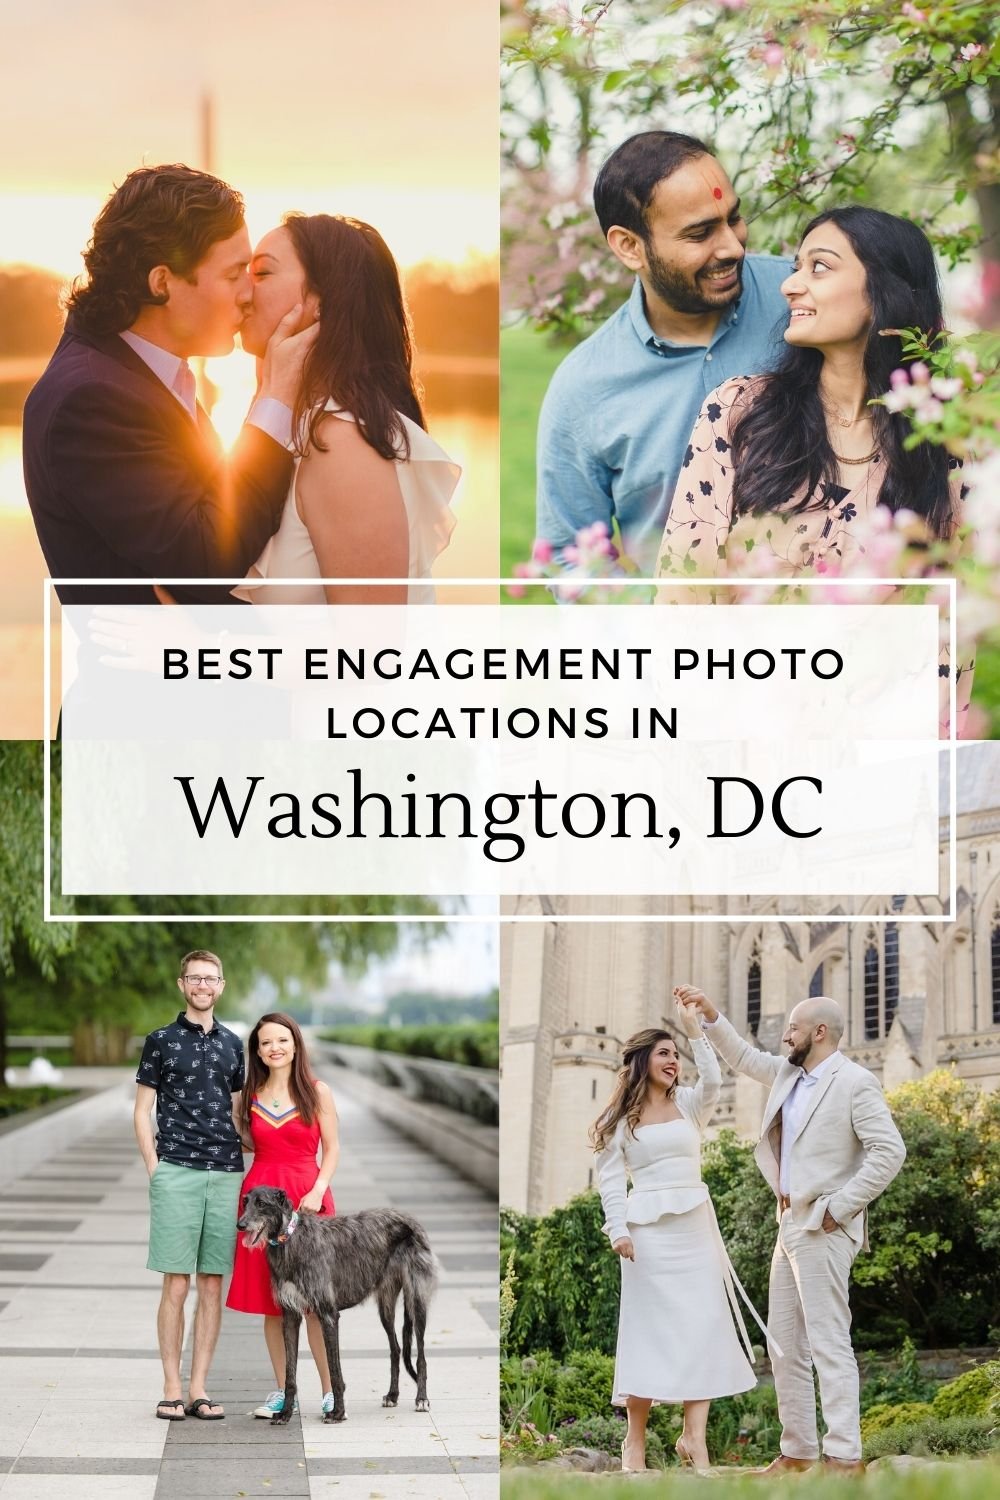 4 images best - dc engagements 3.jpg